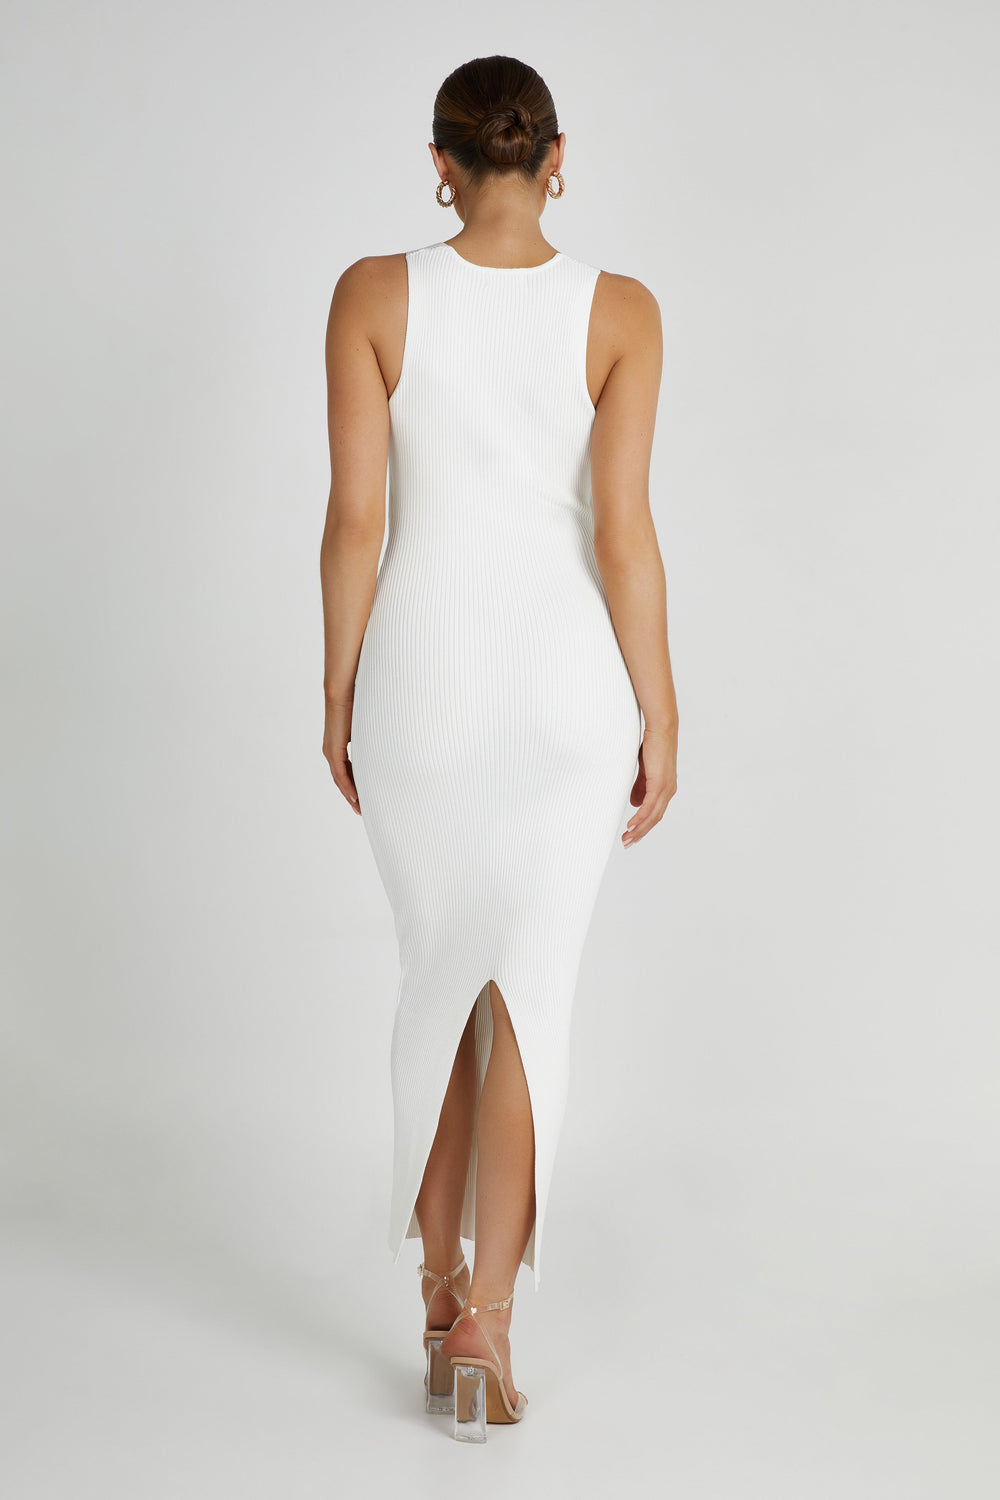 Kaesha Knit Maxi Dress - White